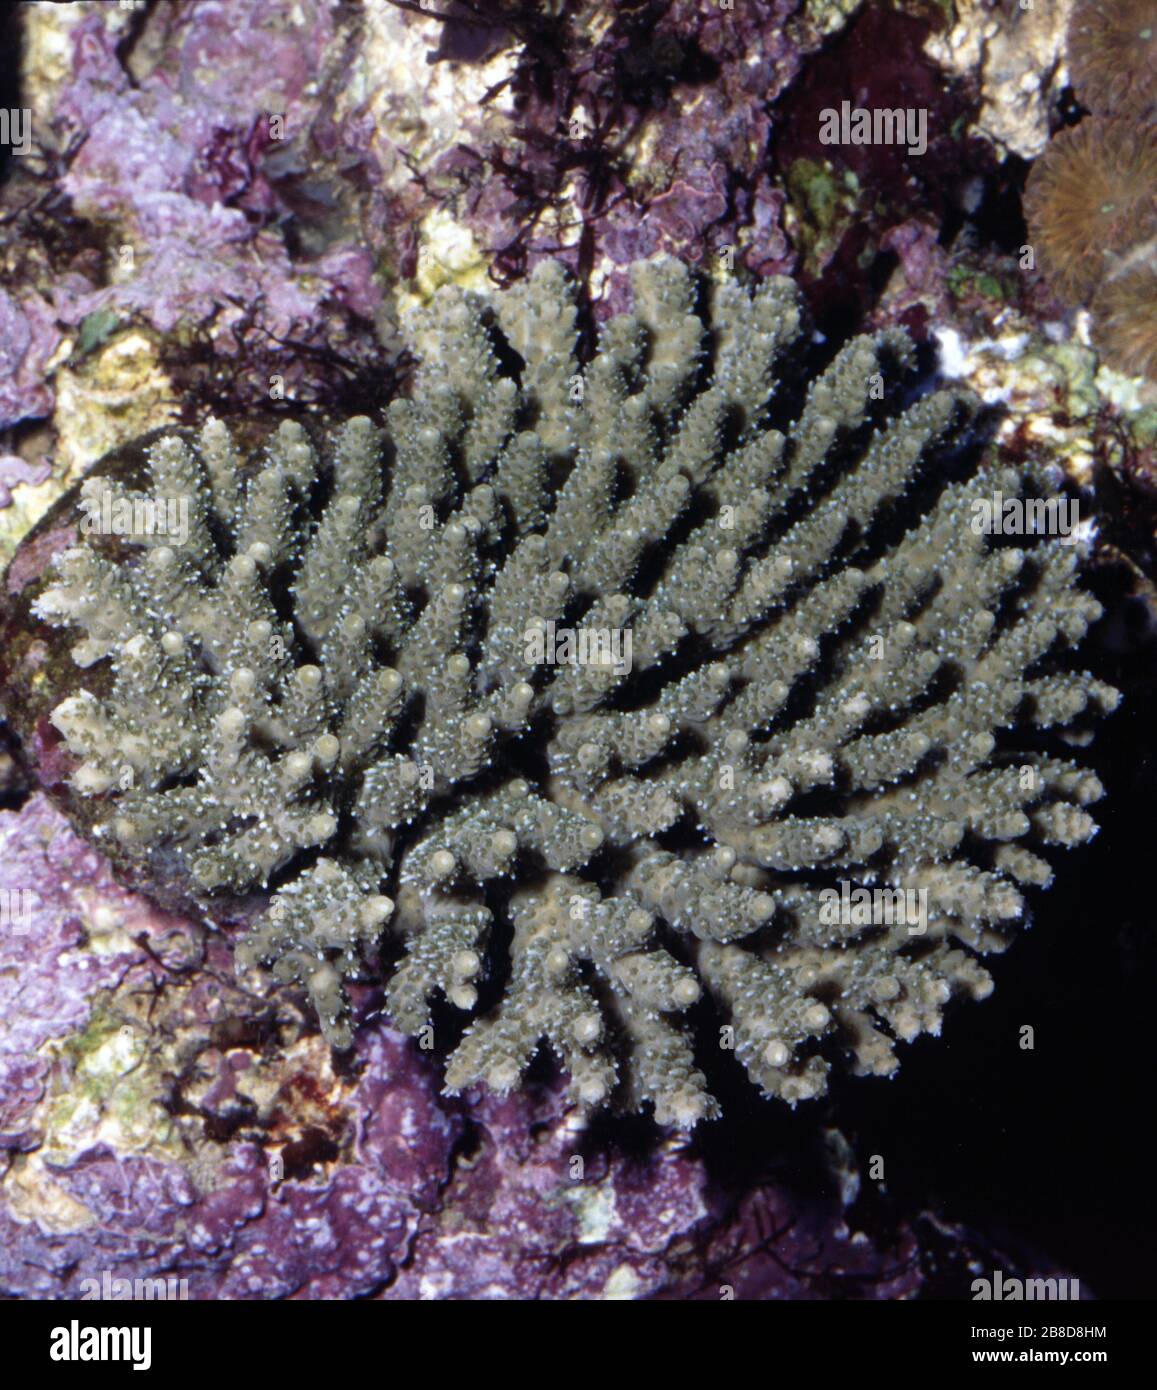 Building stony coral, Acropora subulata Stock Photo